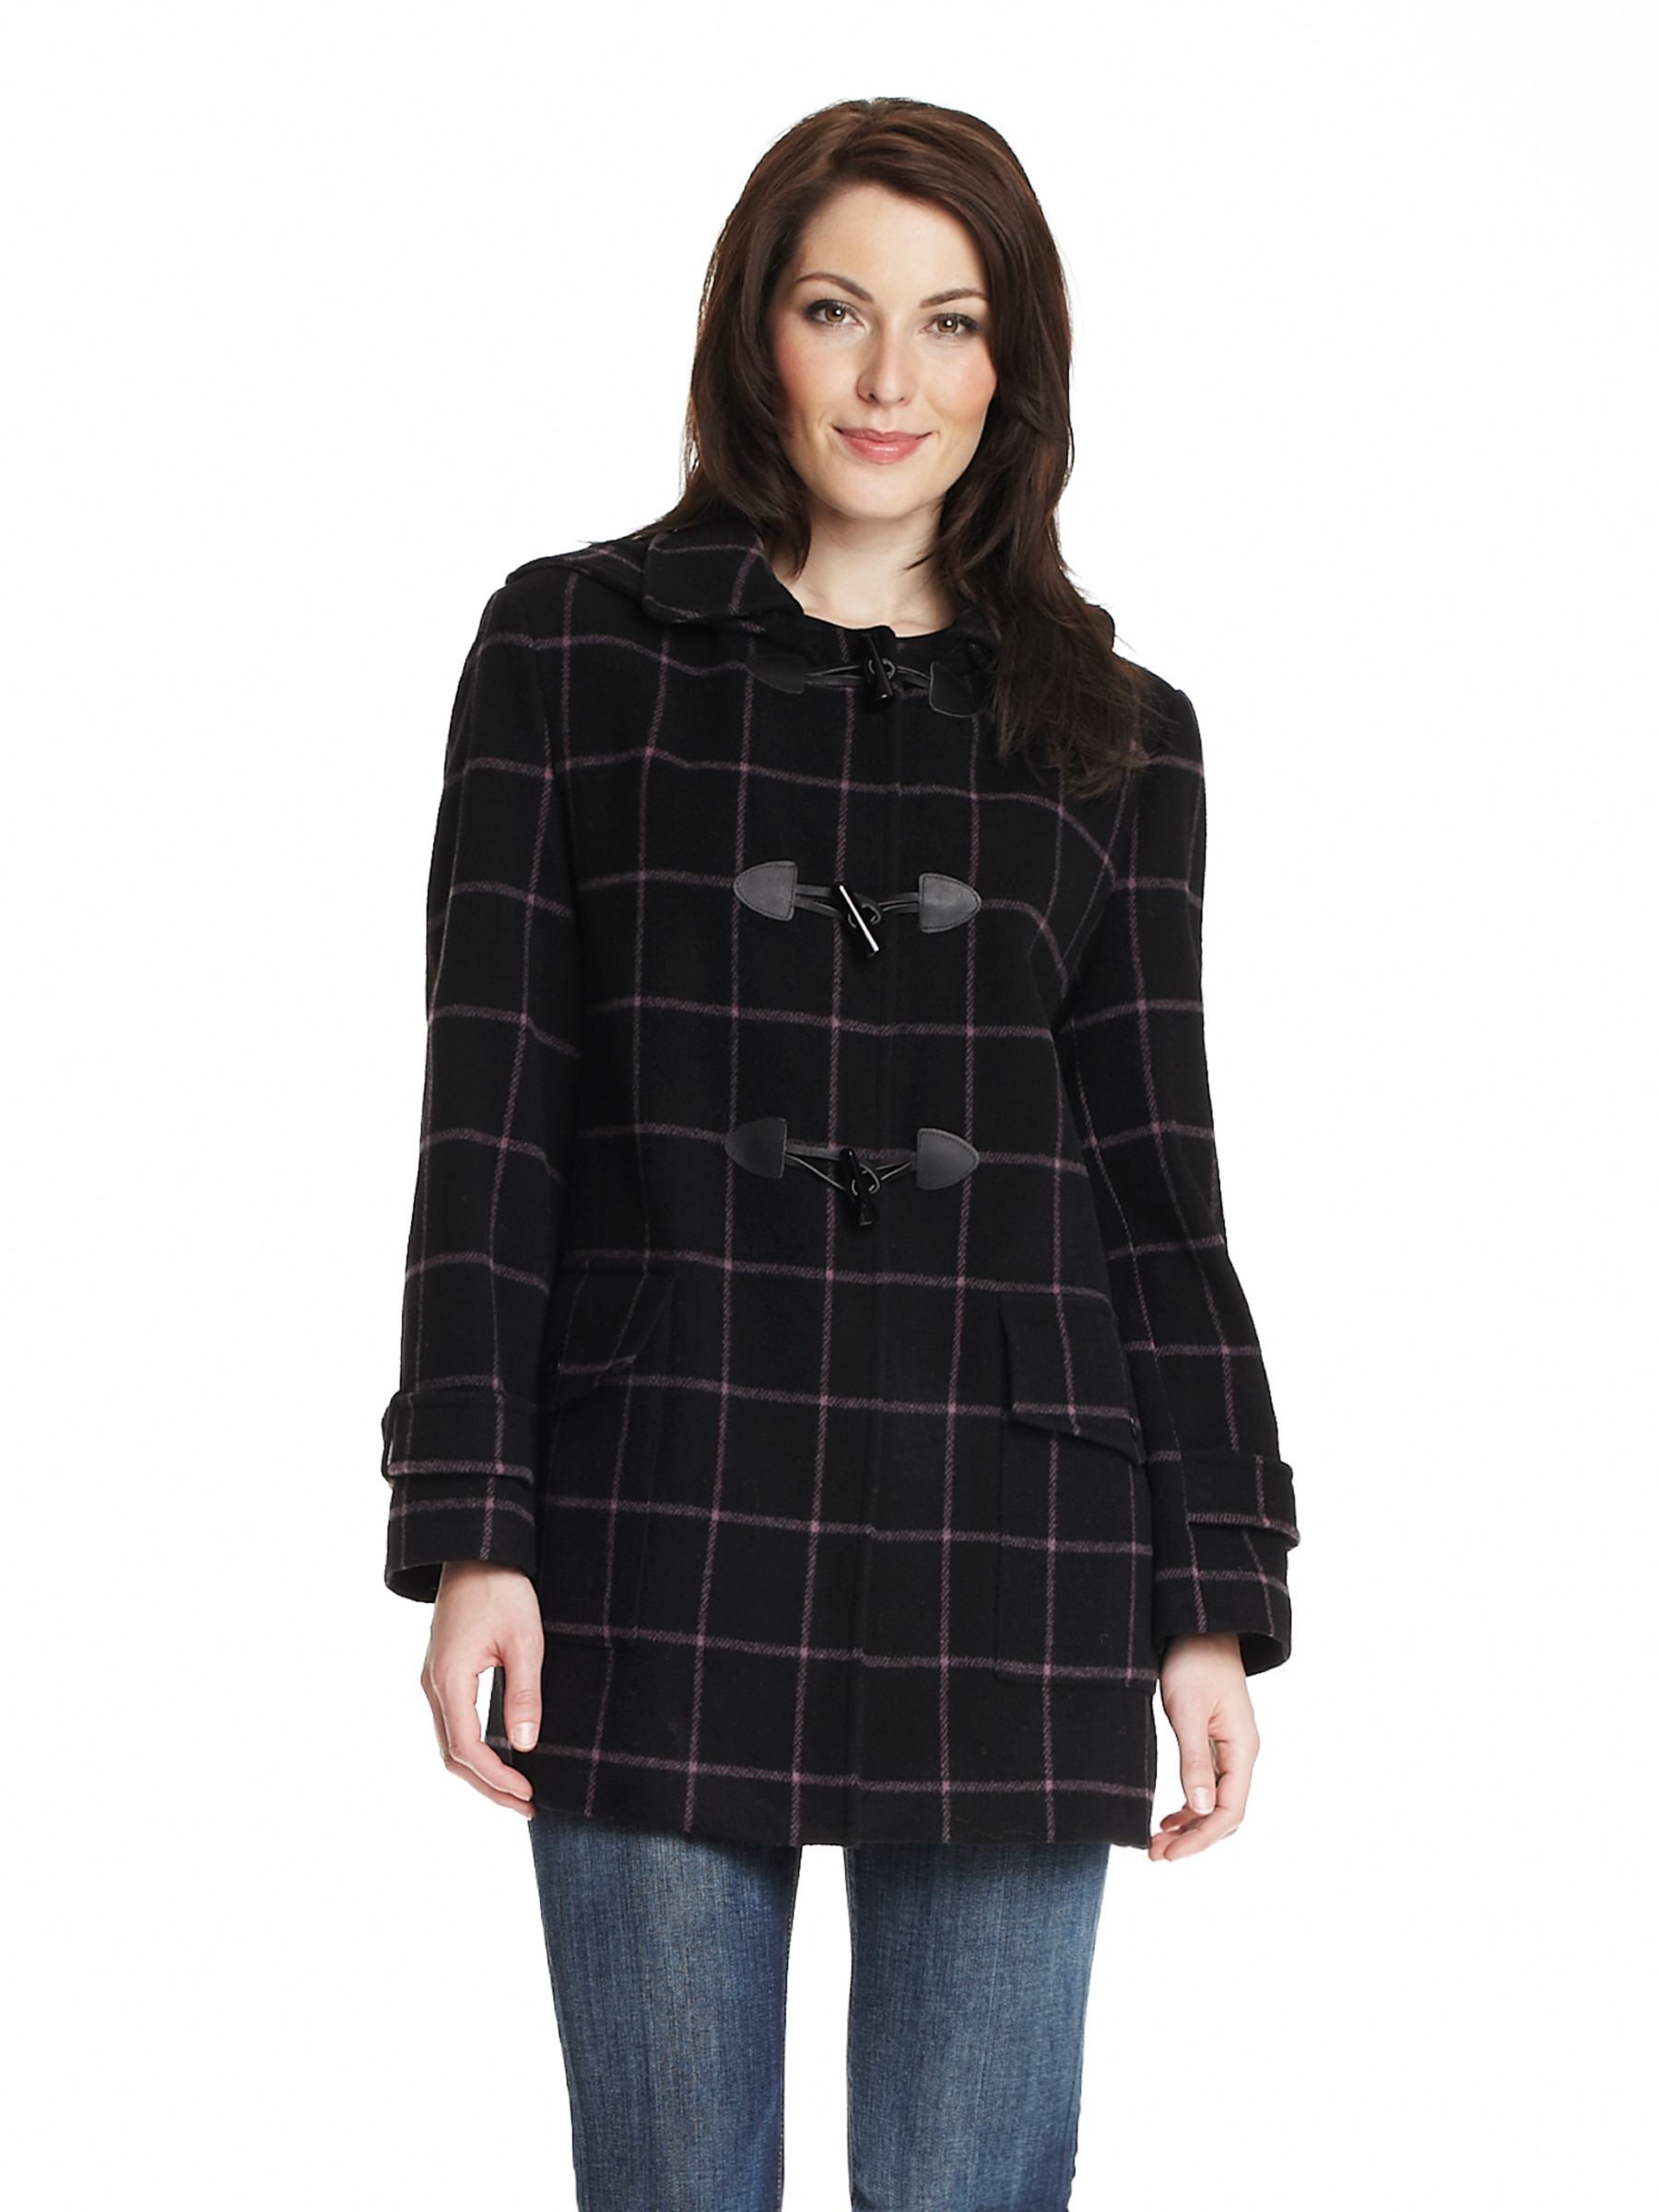 Four Seasons Wool Duffle Coat, Black at JohnLewis